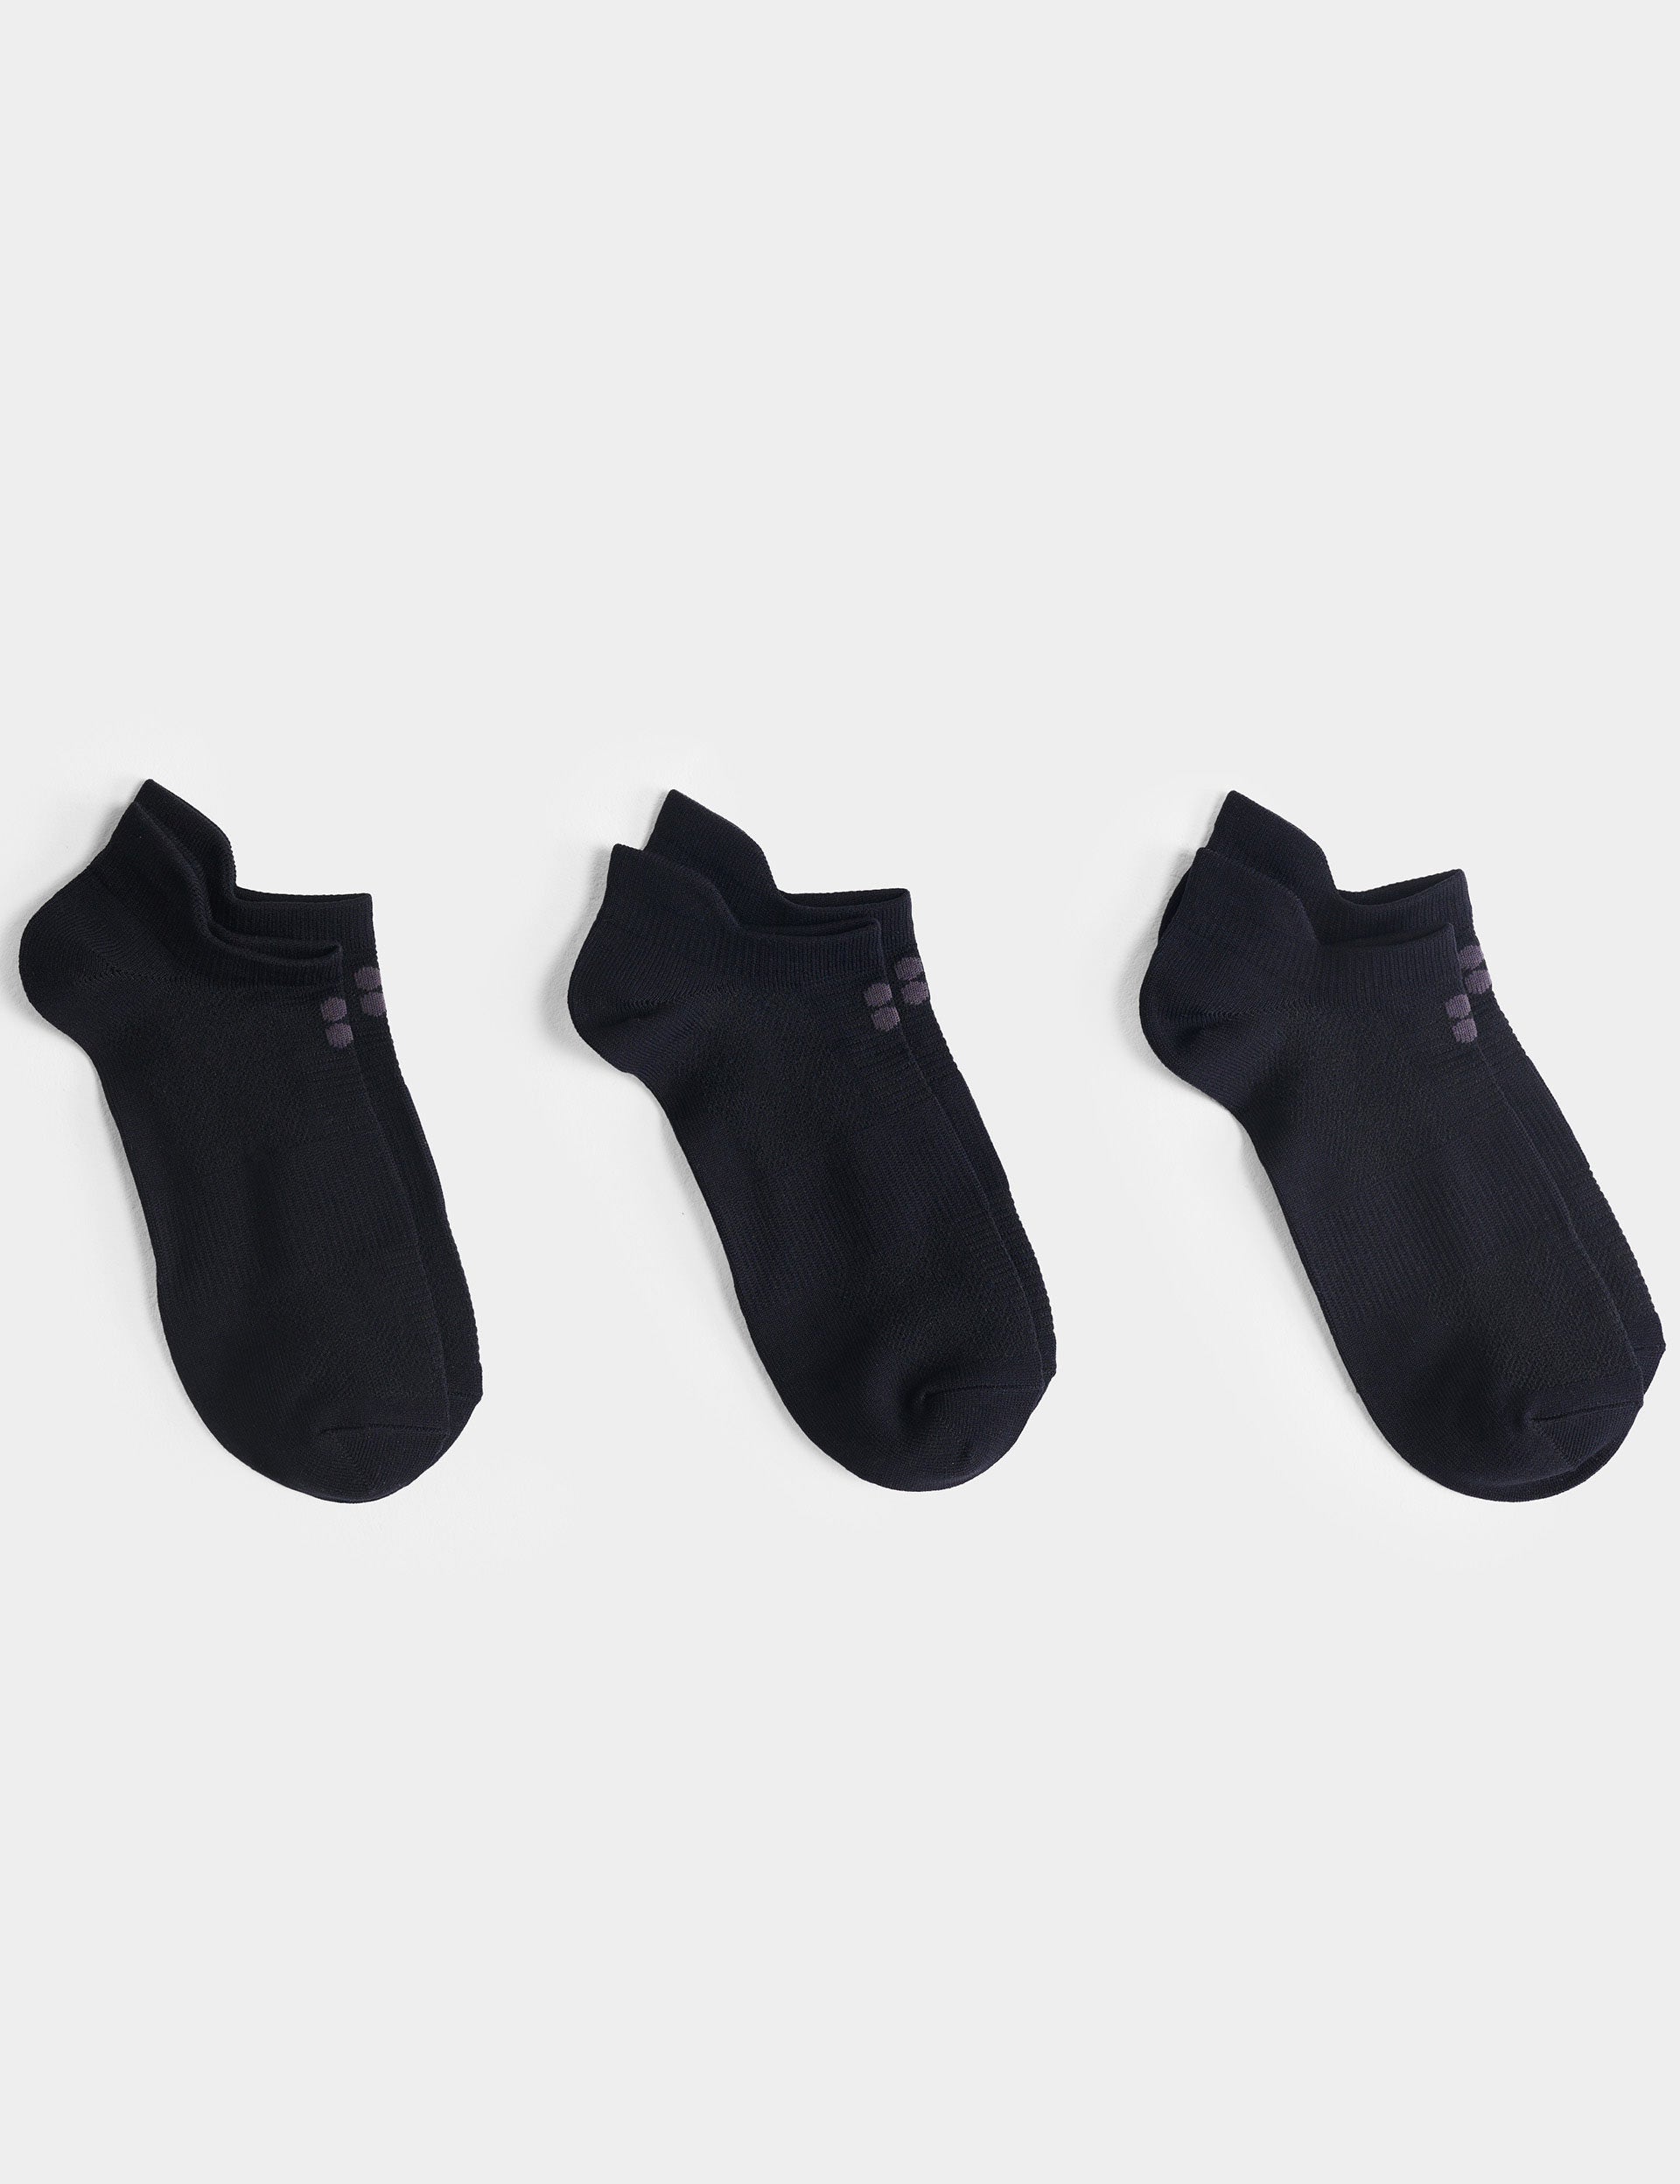 sweaty betty lightweight trainer socks 3 pack - black - s/m